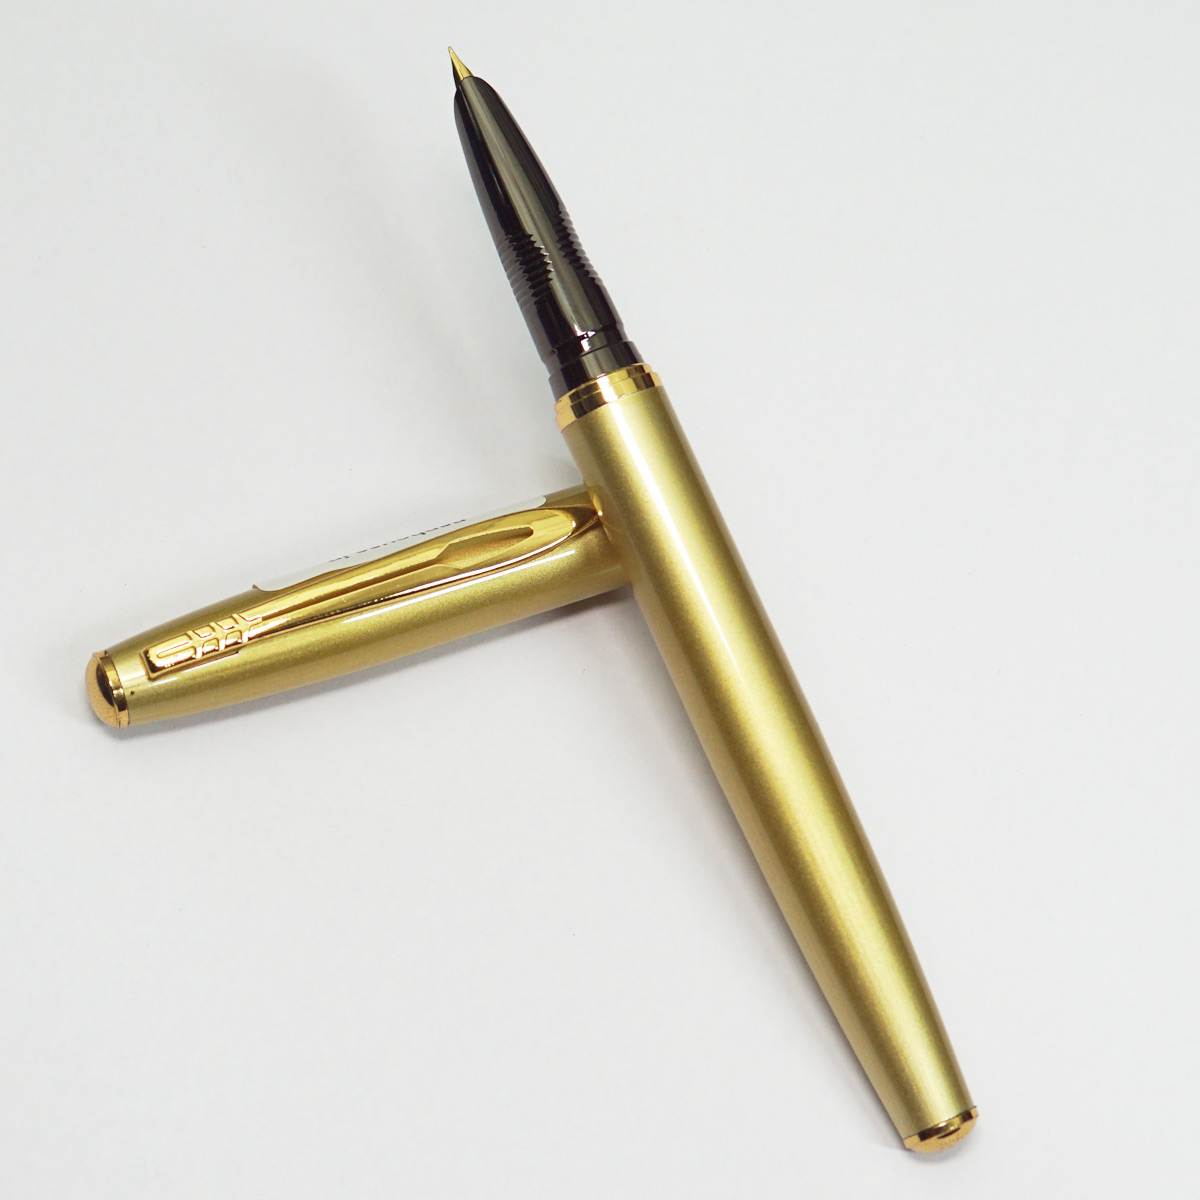 Dikawen 866 Glossy Golden Color Body With Fine Nib Grey Holder Grip Golden Designed Trim Converter Type Fountain Pen SKU 23369